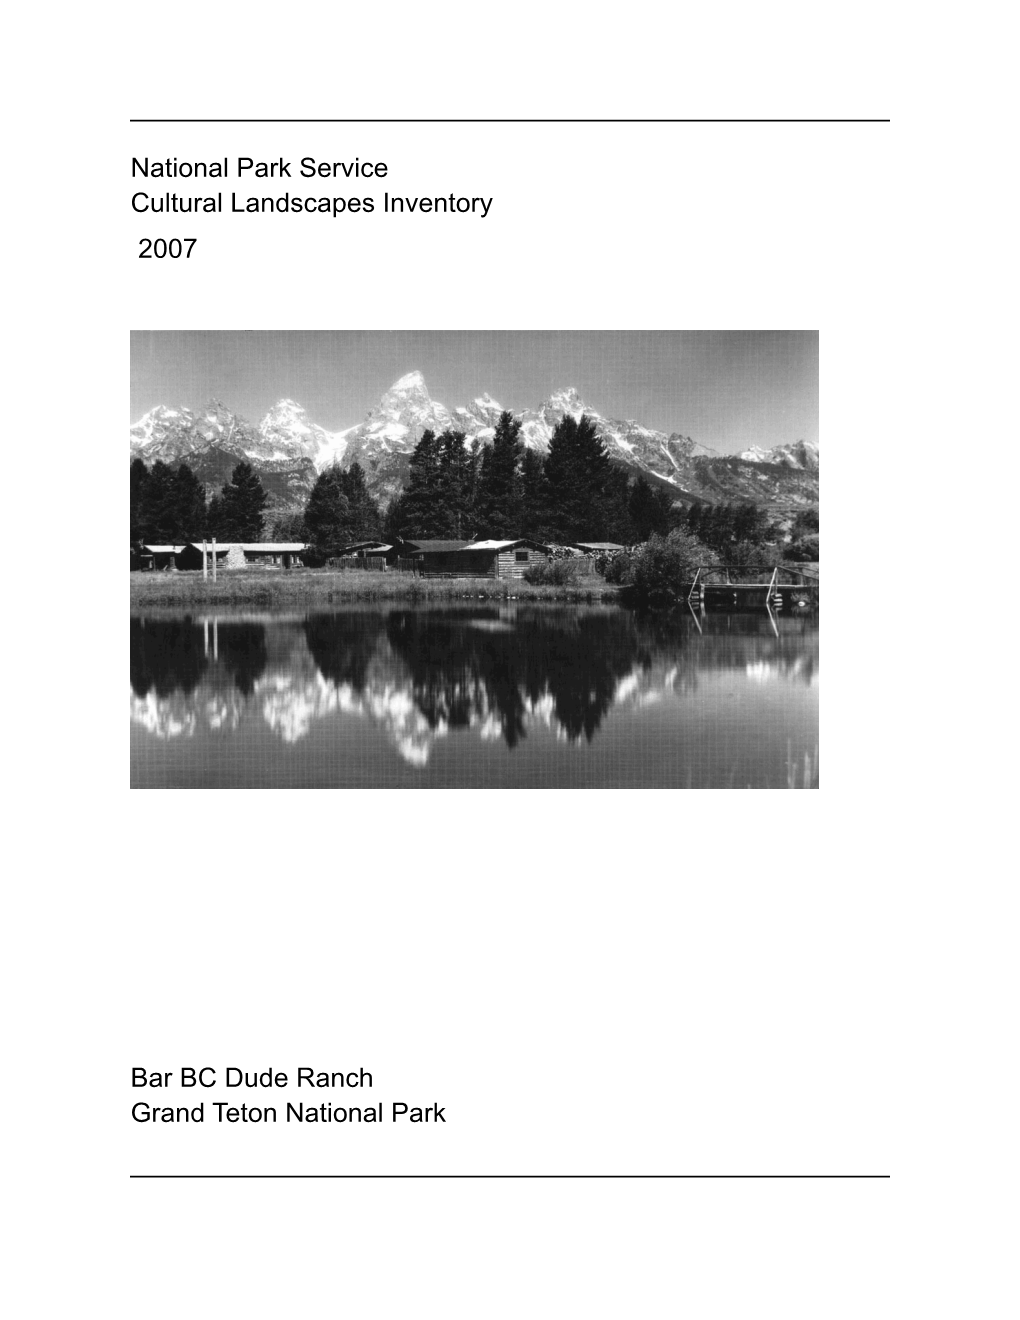 Cultural Landscapes Inventory, Bar BC Dude Ranch, Grand Teton